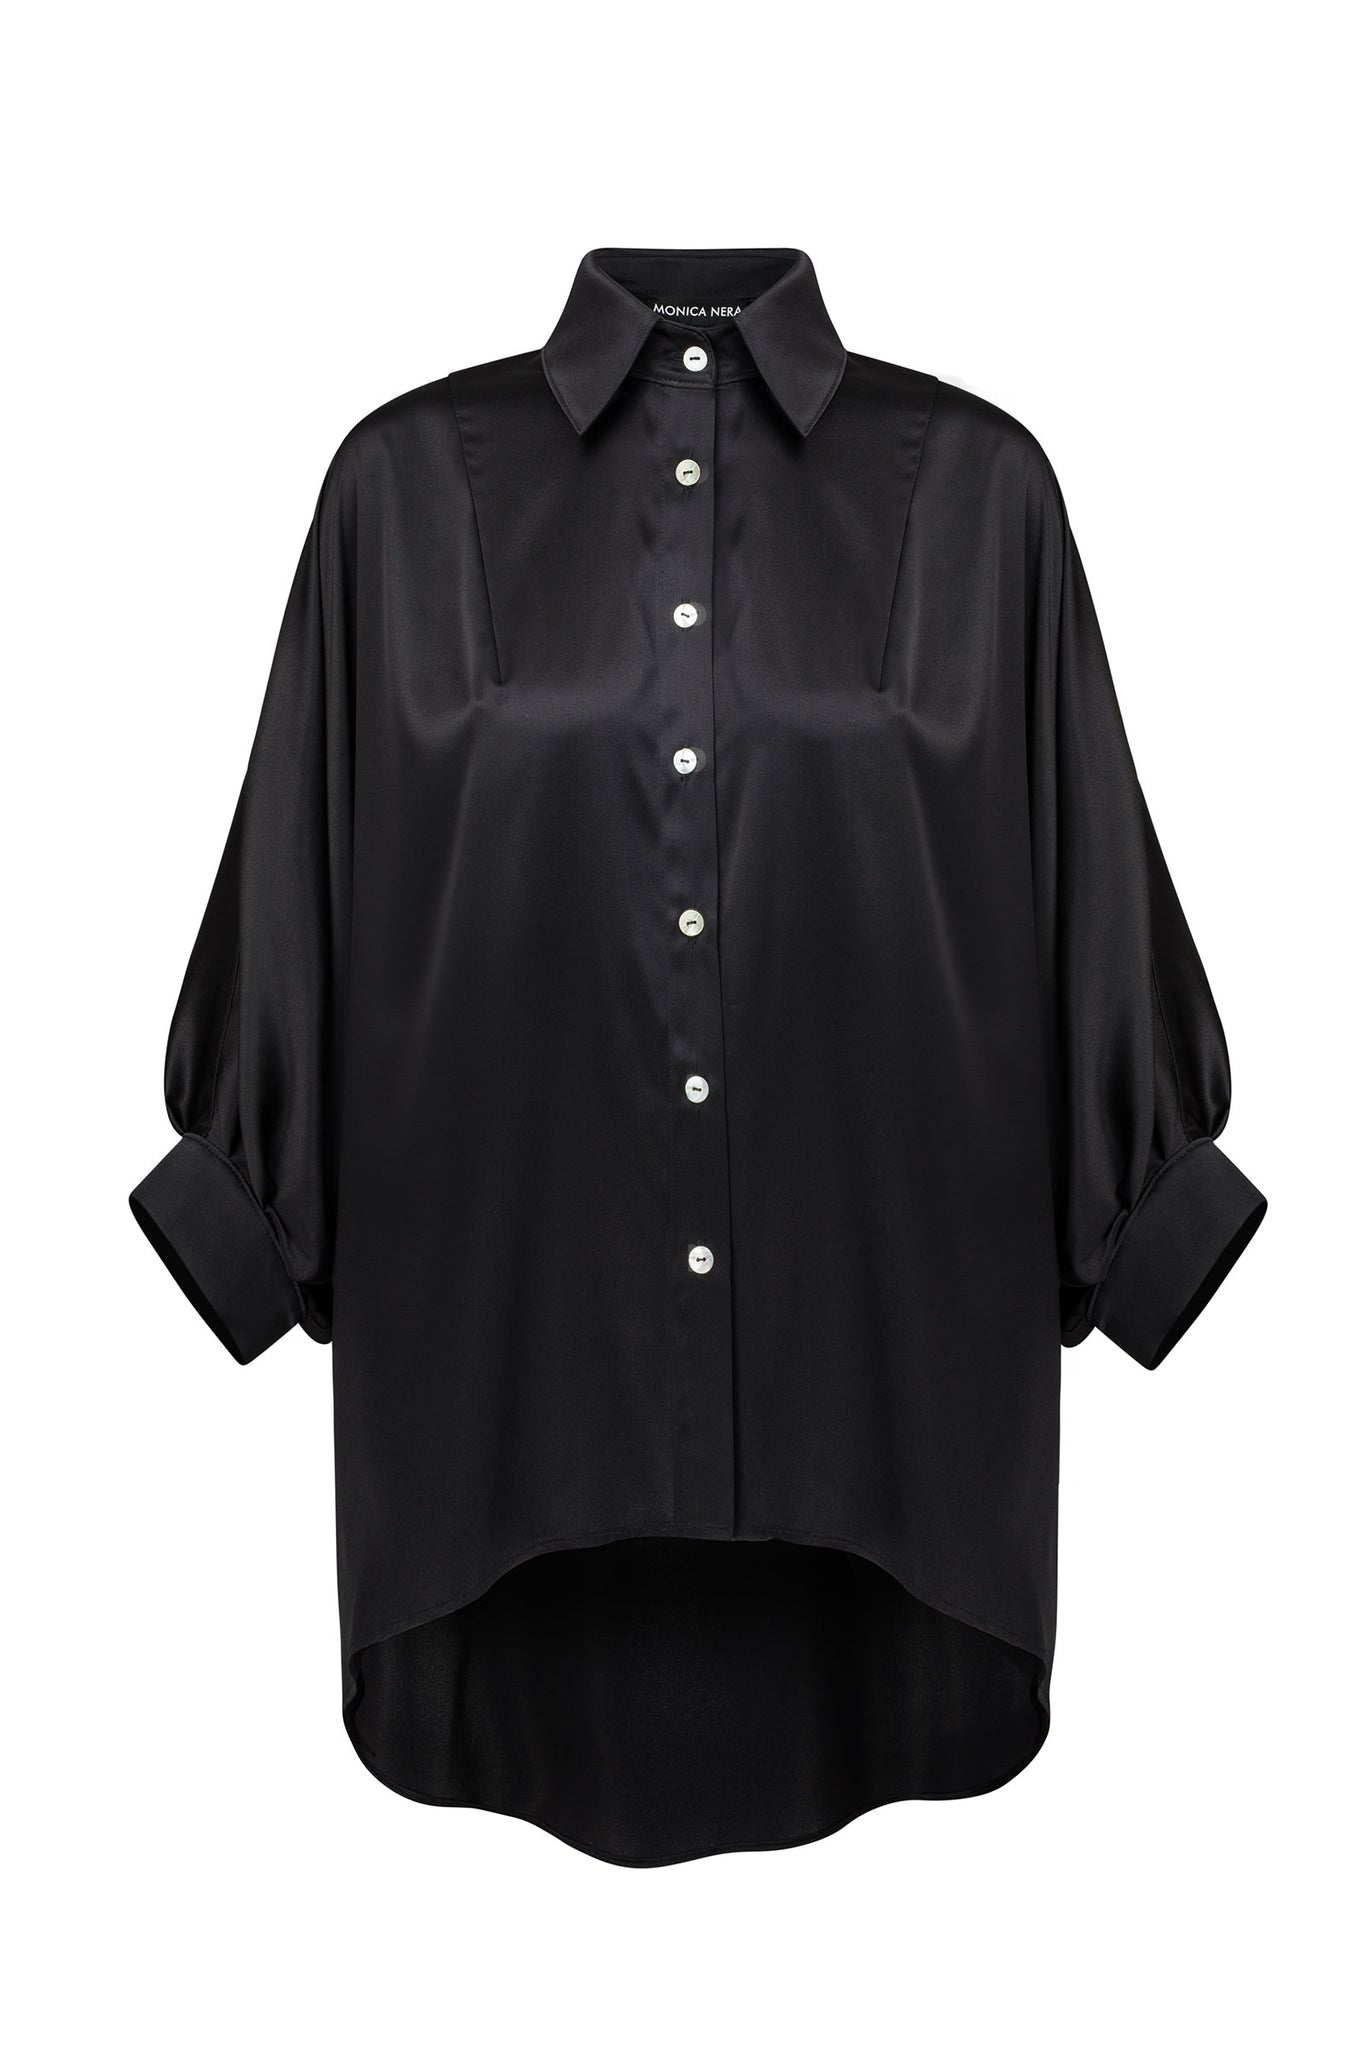 Monica Long Sleeve Top - Black